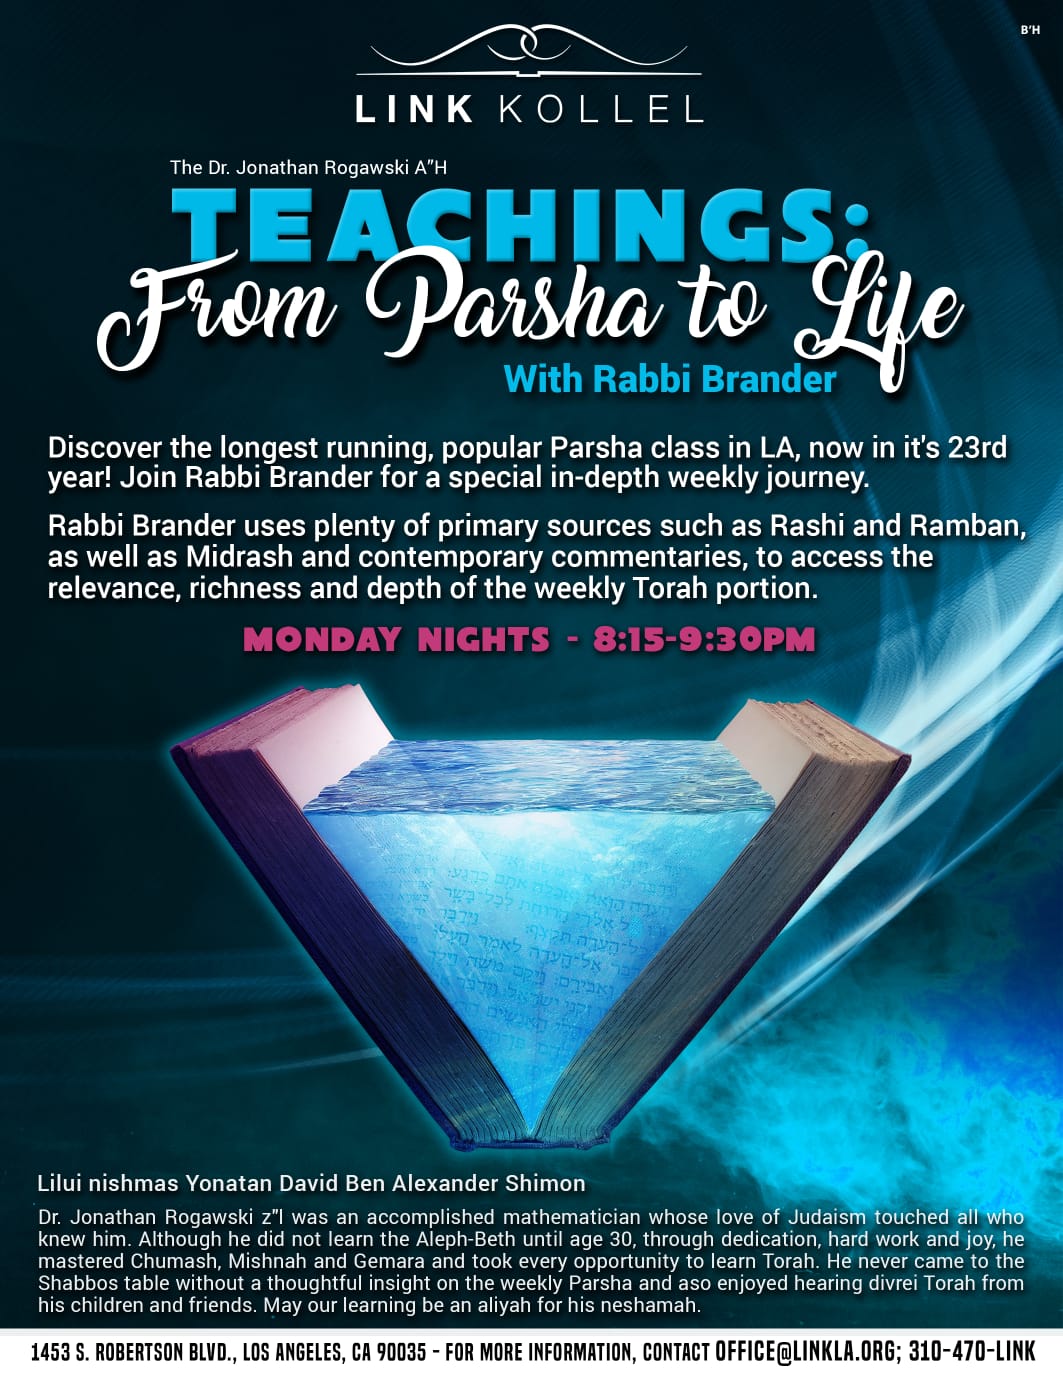 Flyer for Rabbi Brander's Parsha Shiur